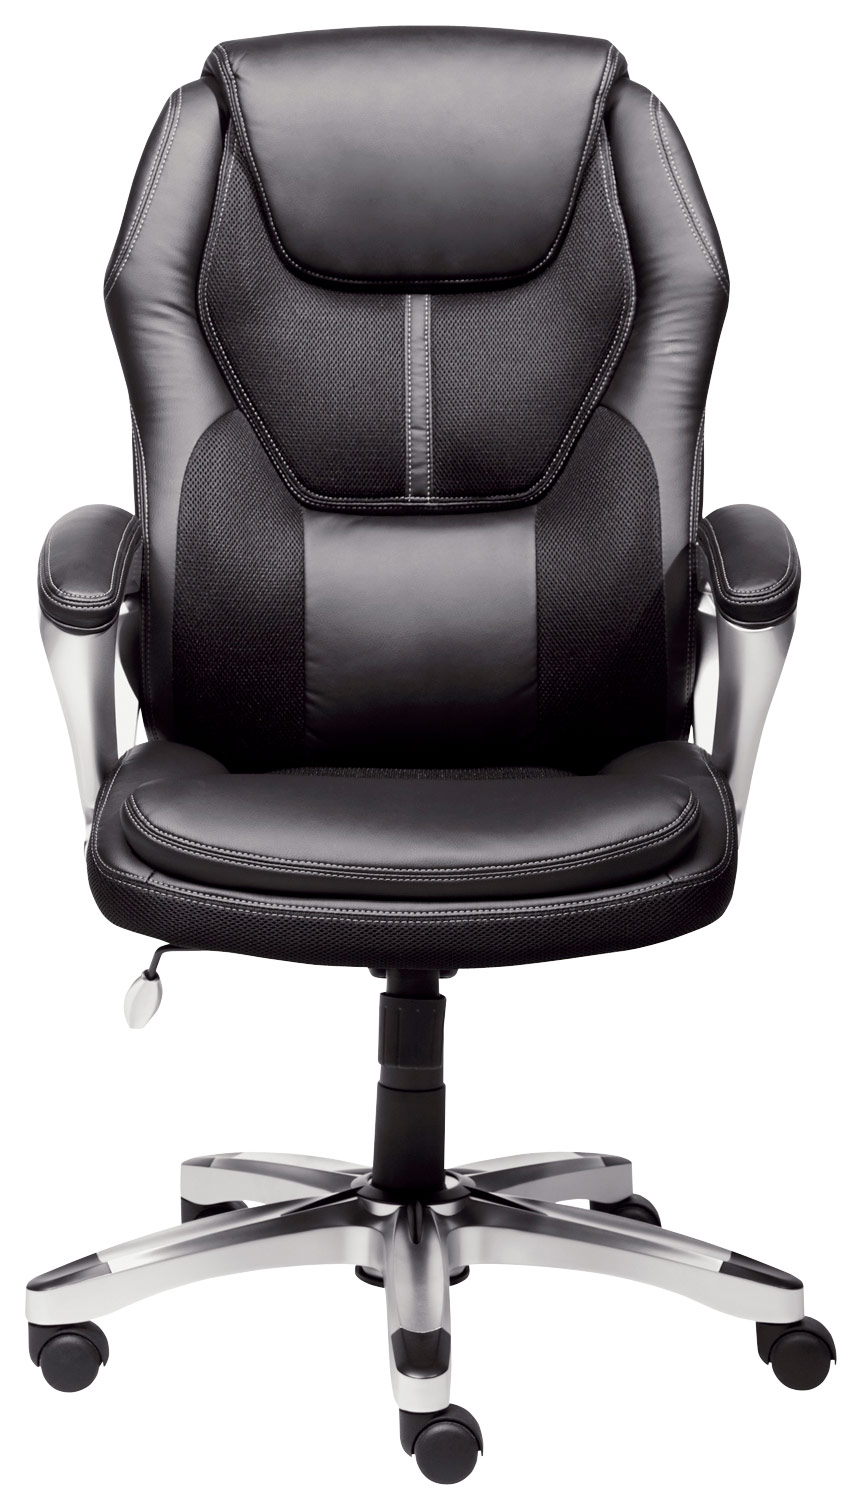 Serta Executive Office Chair Black 43673 - Best Buy